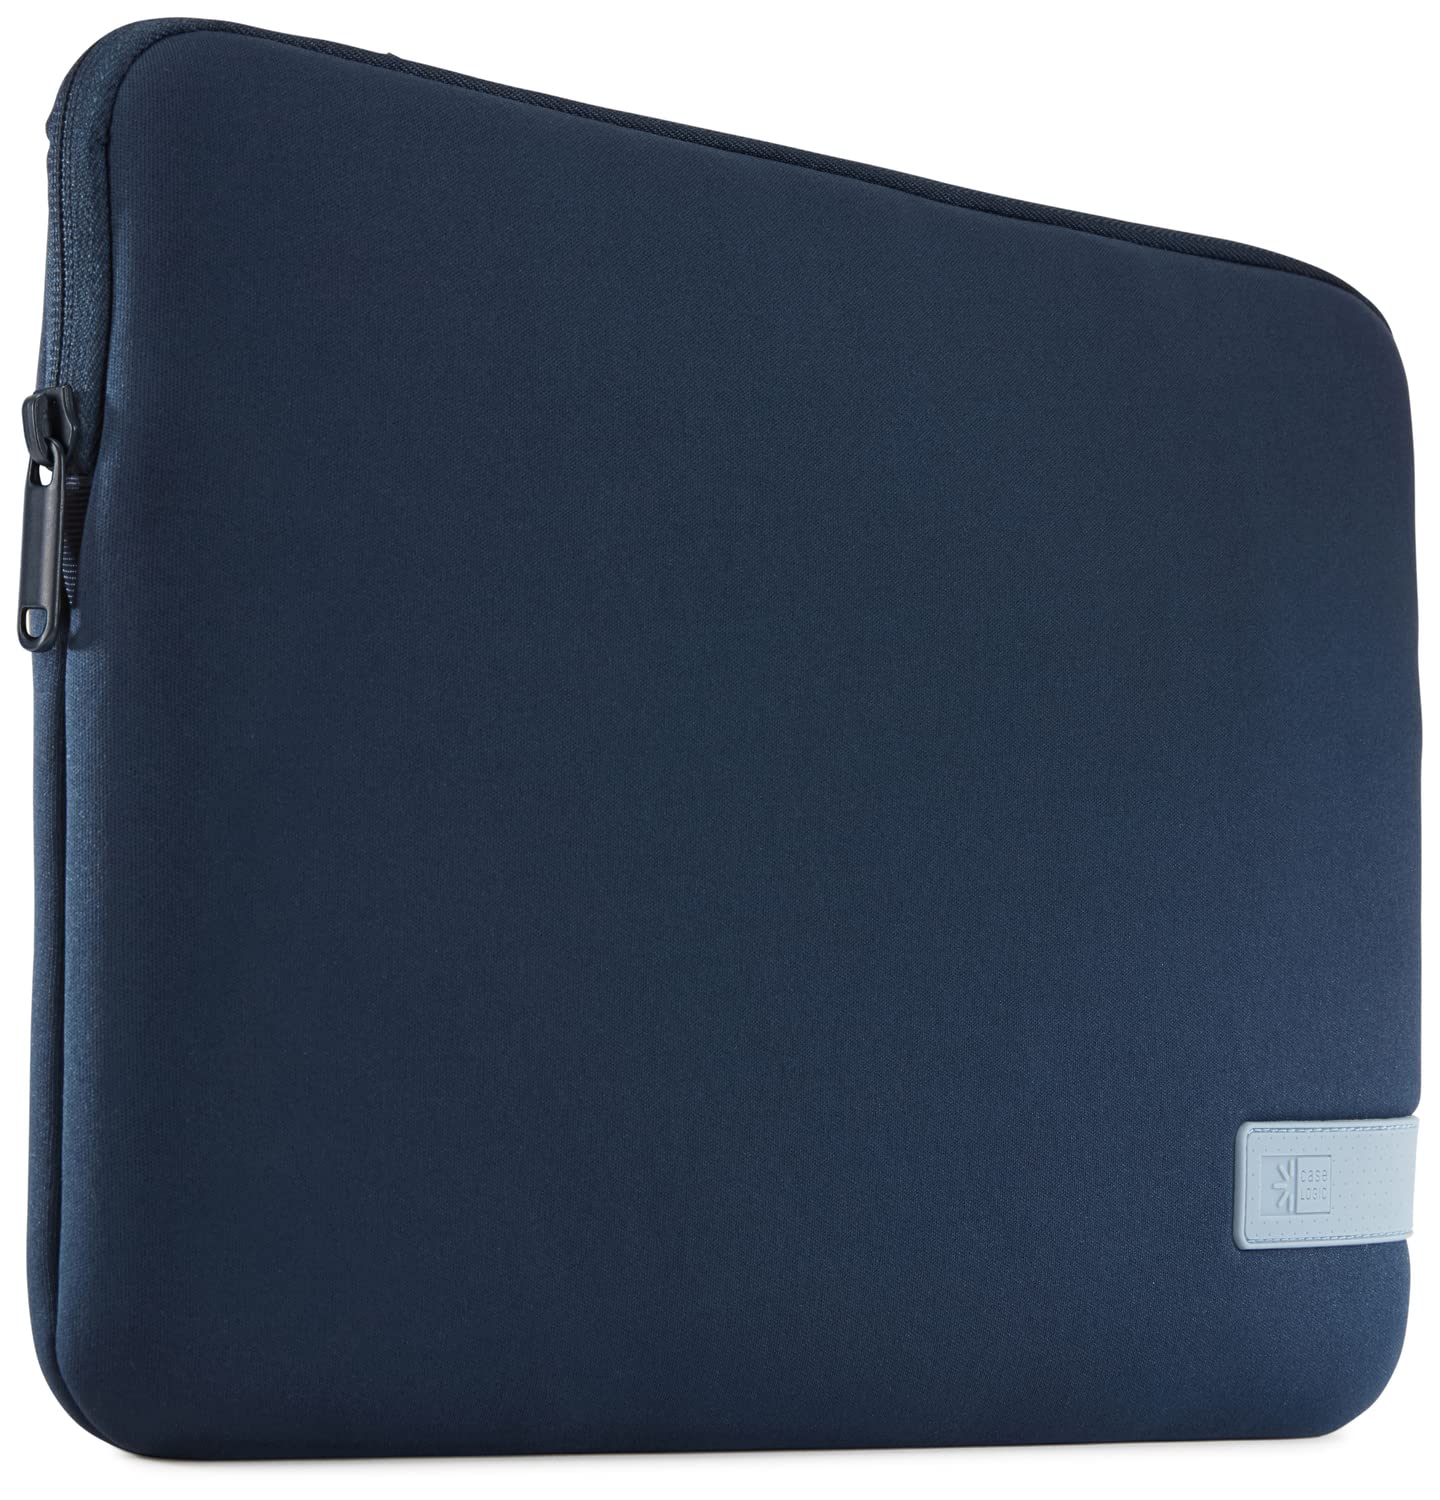 13" Case Logic Reflect Laptop Sleeve (Dark Blue) $8 + Free Shipping w/ Prime or on $35+